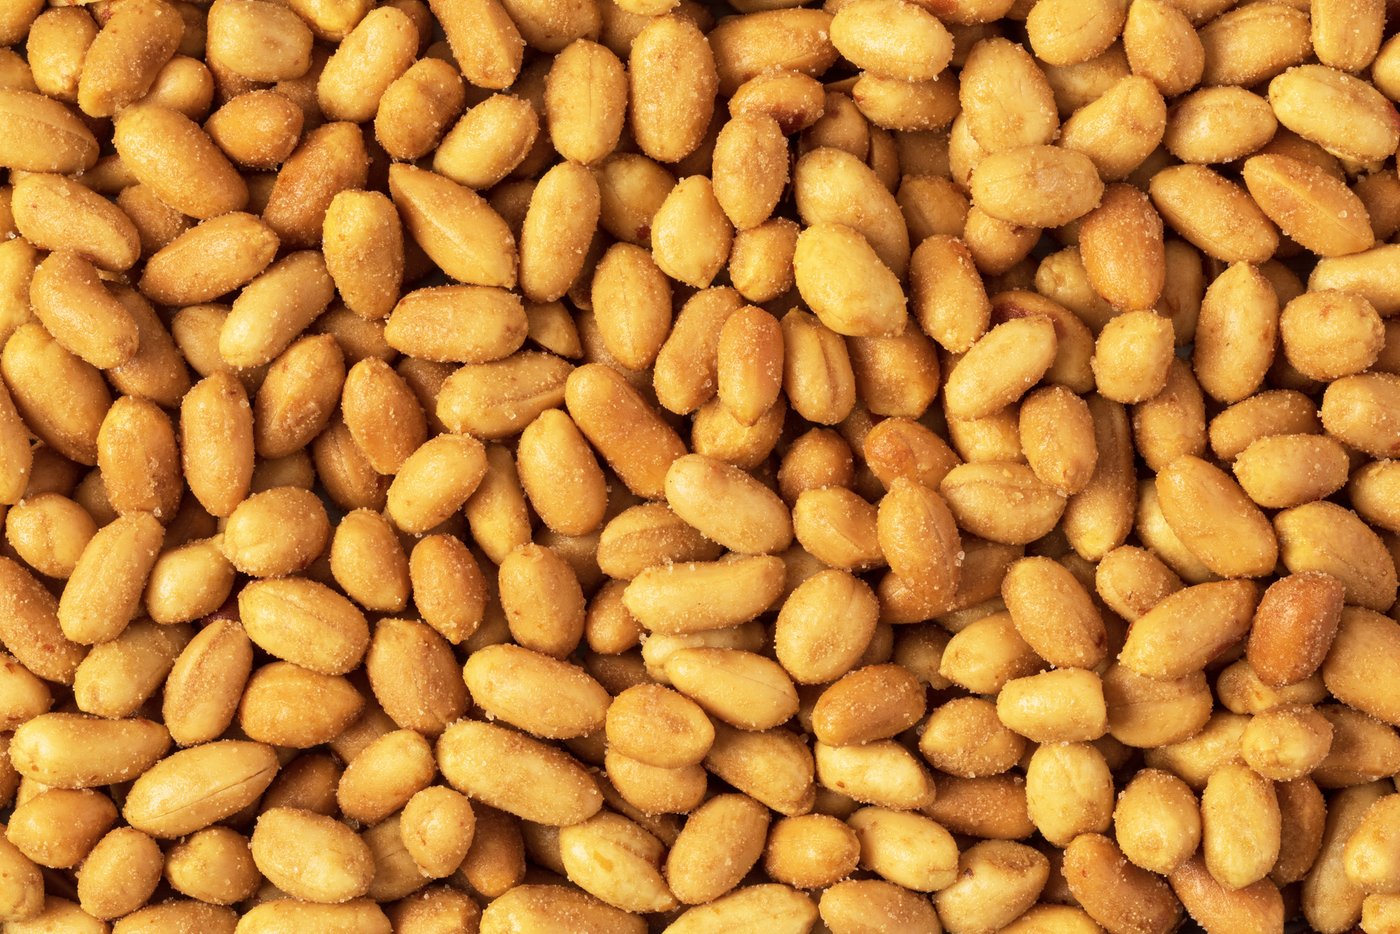 Salted Caramel Peanuts photo